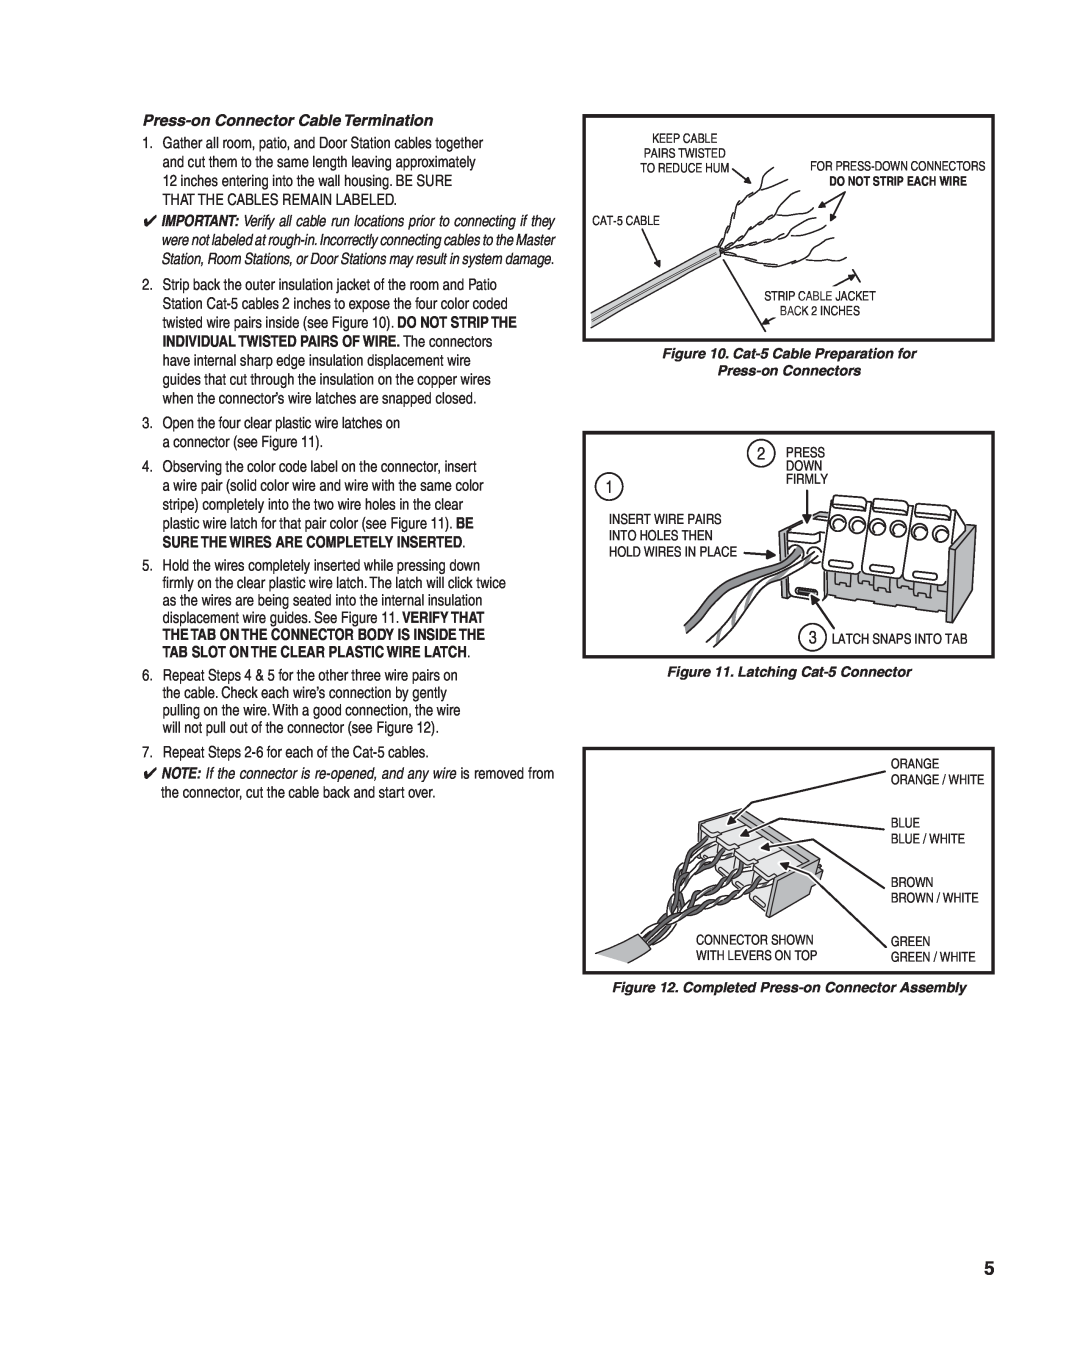 M&S Systems DMC1HC Press-onConnector Cable Termination, Cat-5Cable Preparation for, Press-onConnectors 